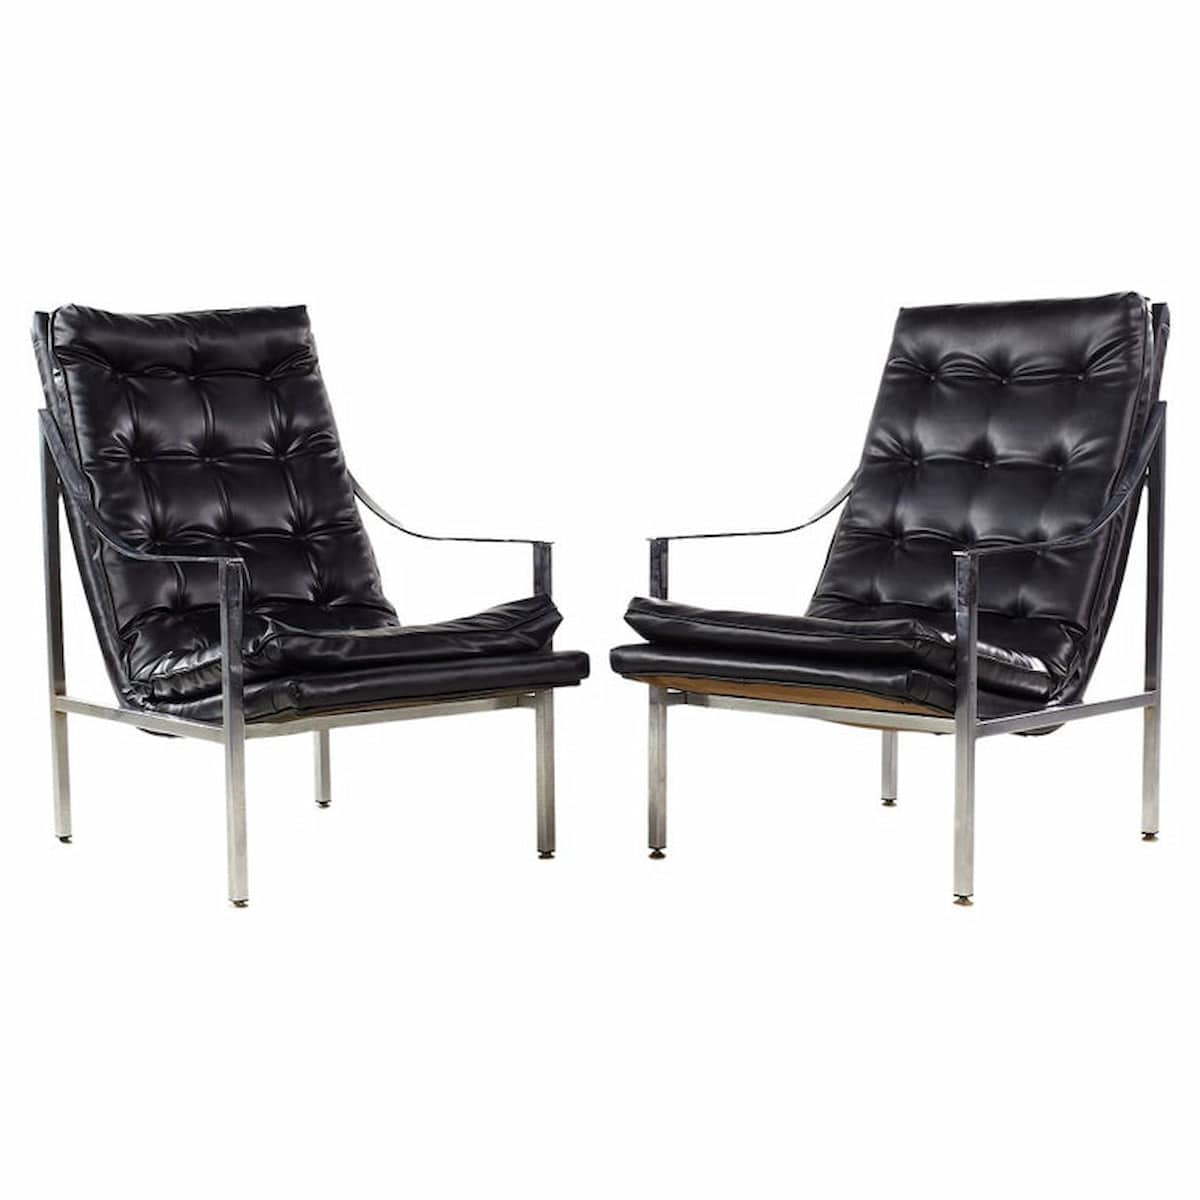 Milo Baughman Style Mid Century Chrome Tufted Lounge Chairs - Pair